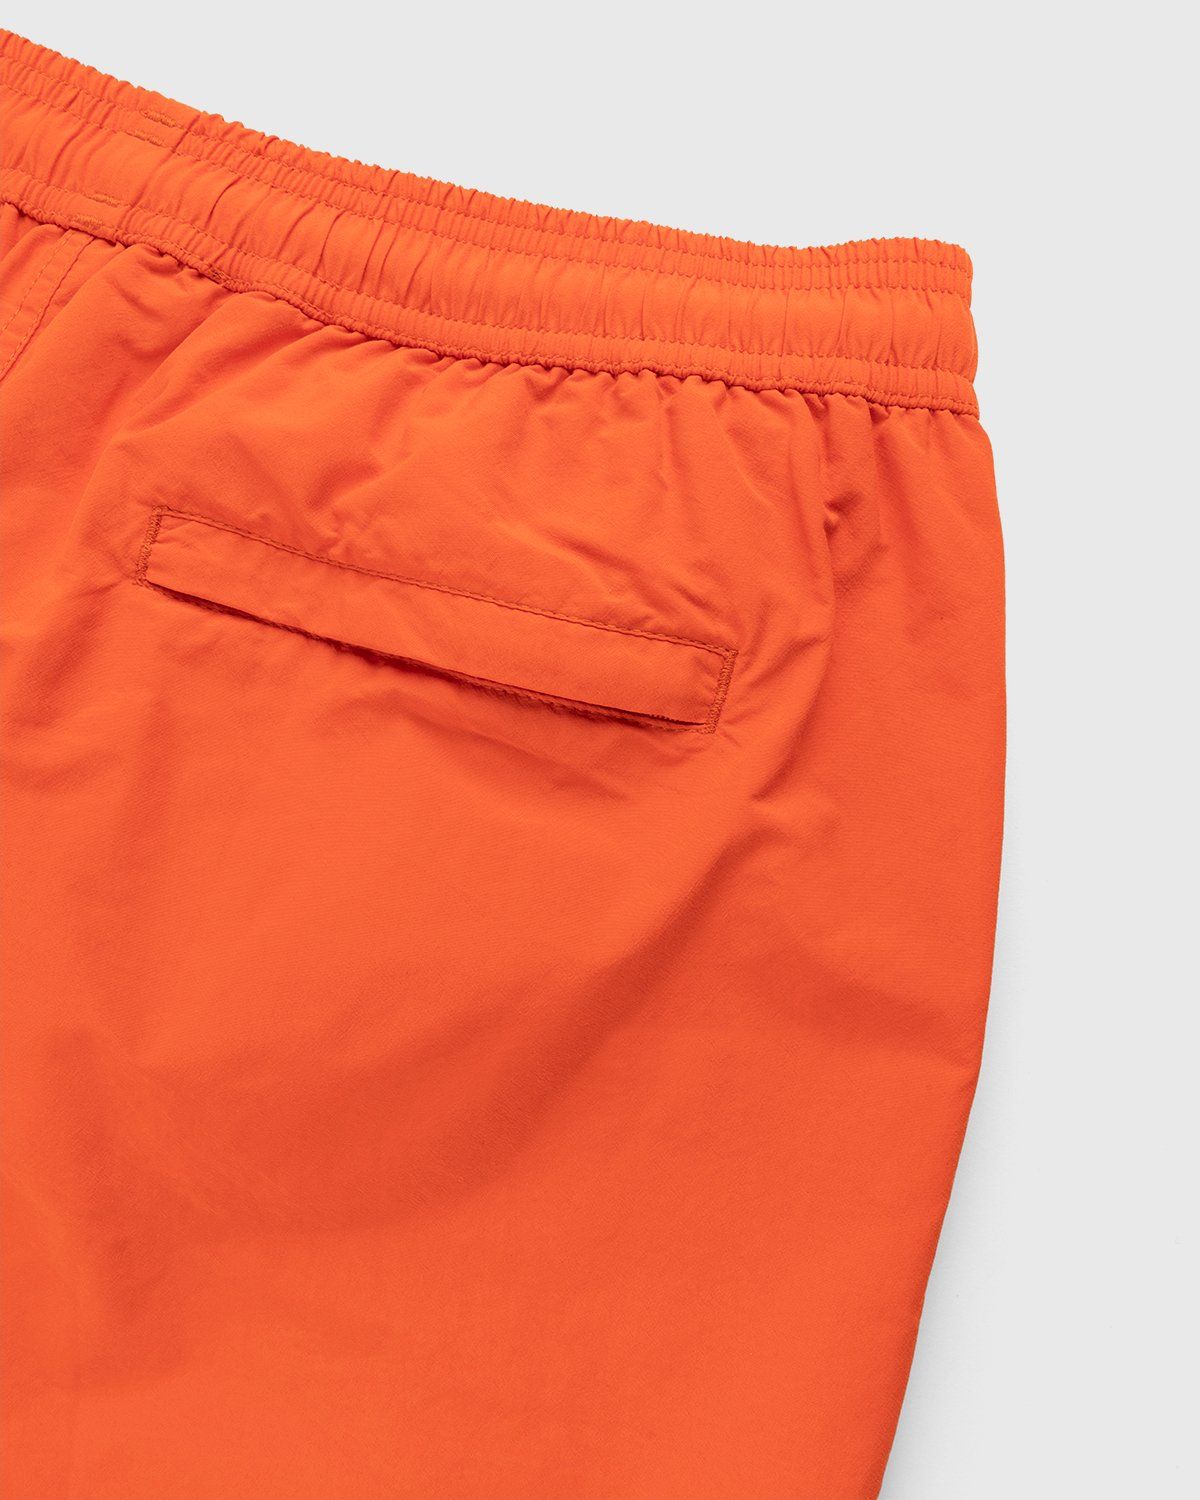 A-Cold-Wall* – Natant Nylon Short Rich Orange - Active Shorts - Orange - Image 3